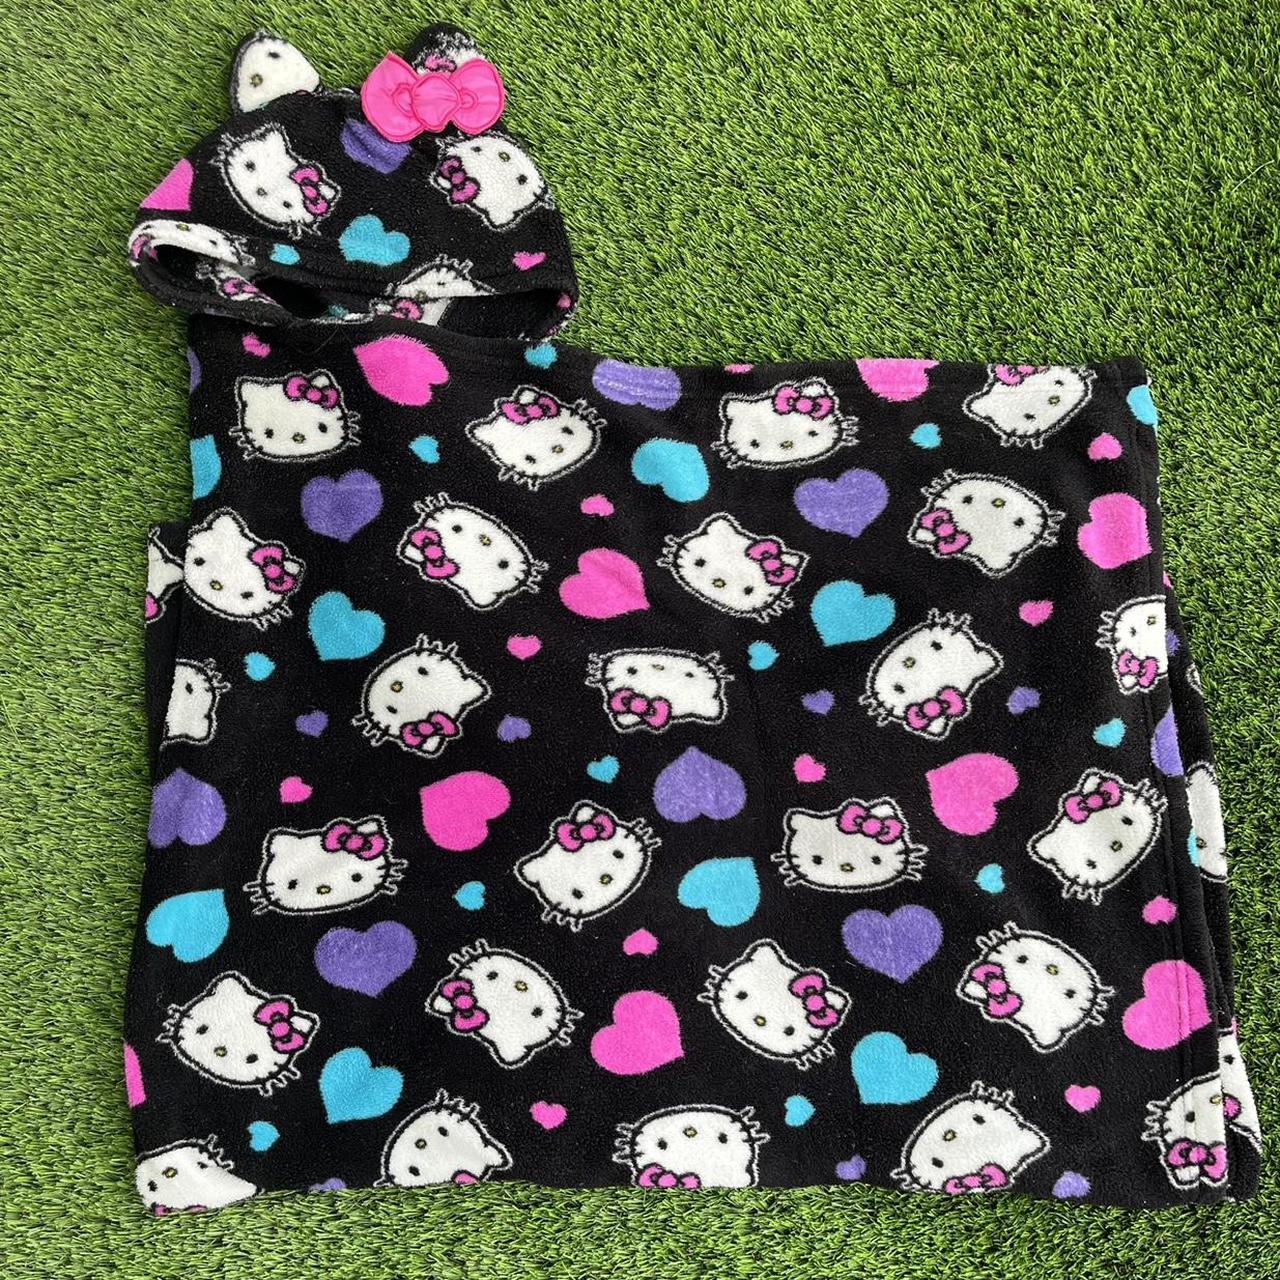 Hello Kitty x FOREVER 21 Throw Blanket Brand New - Depop